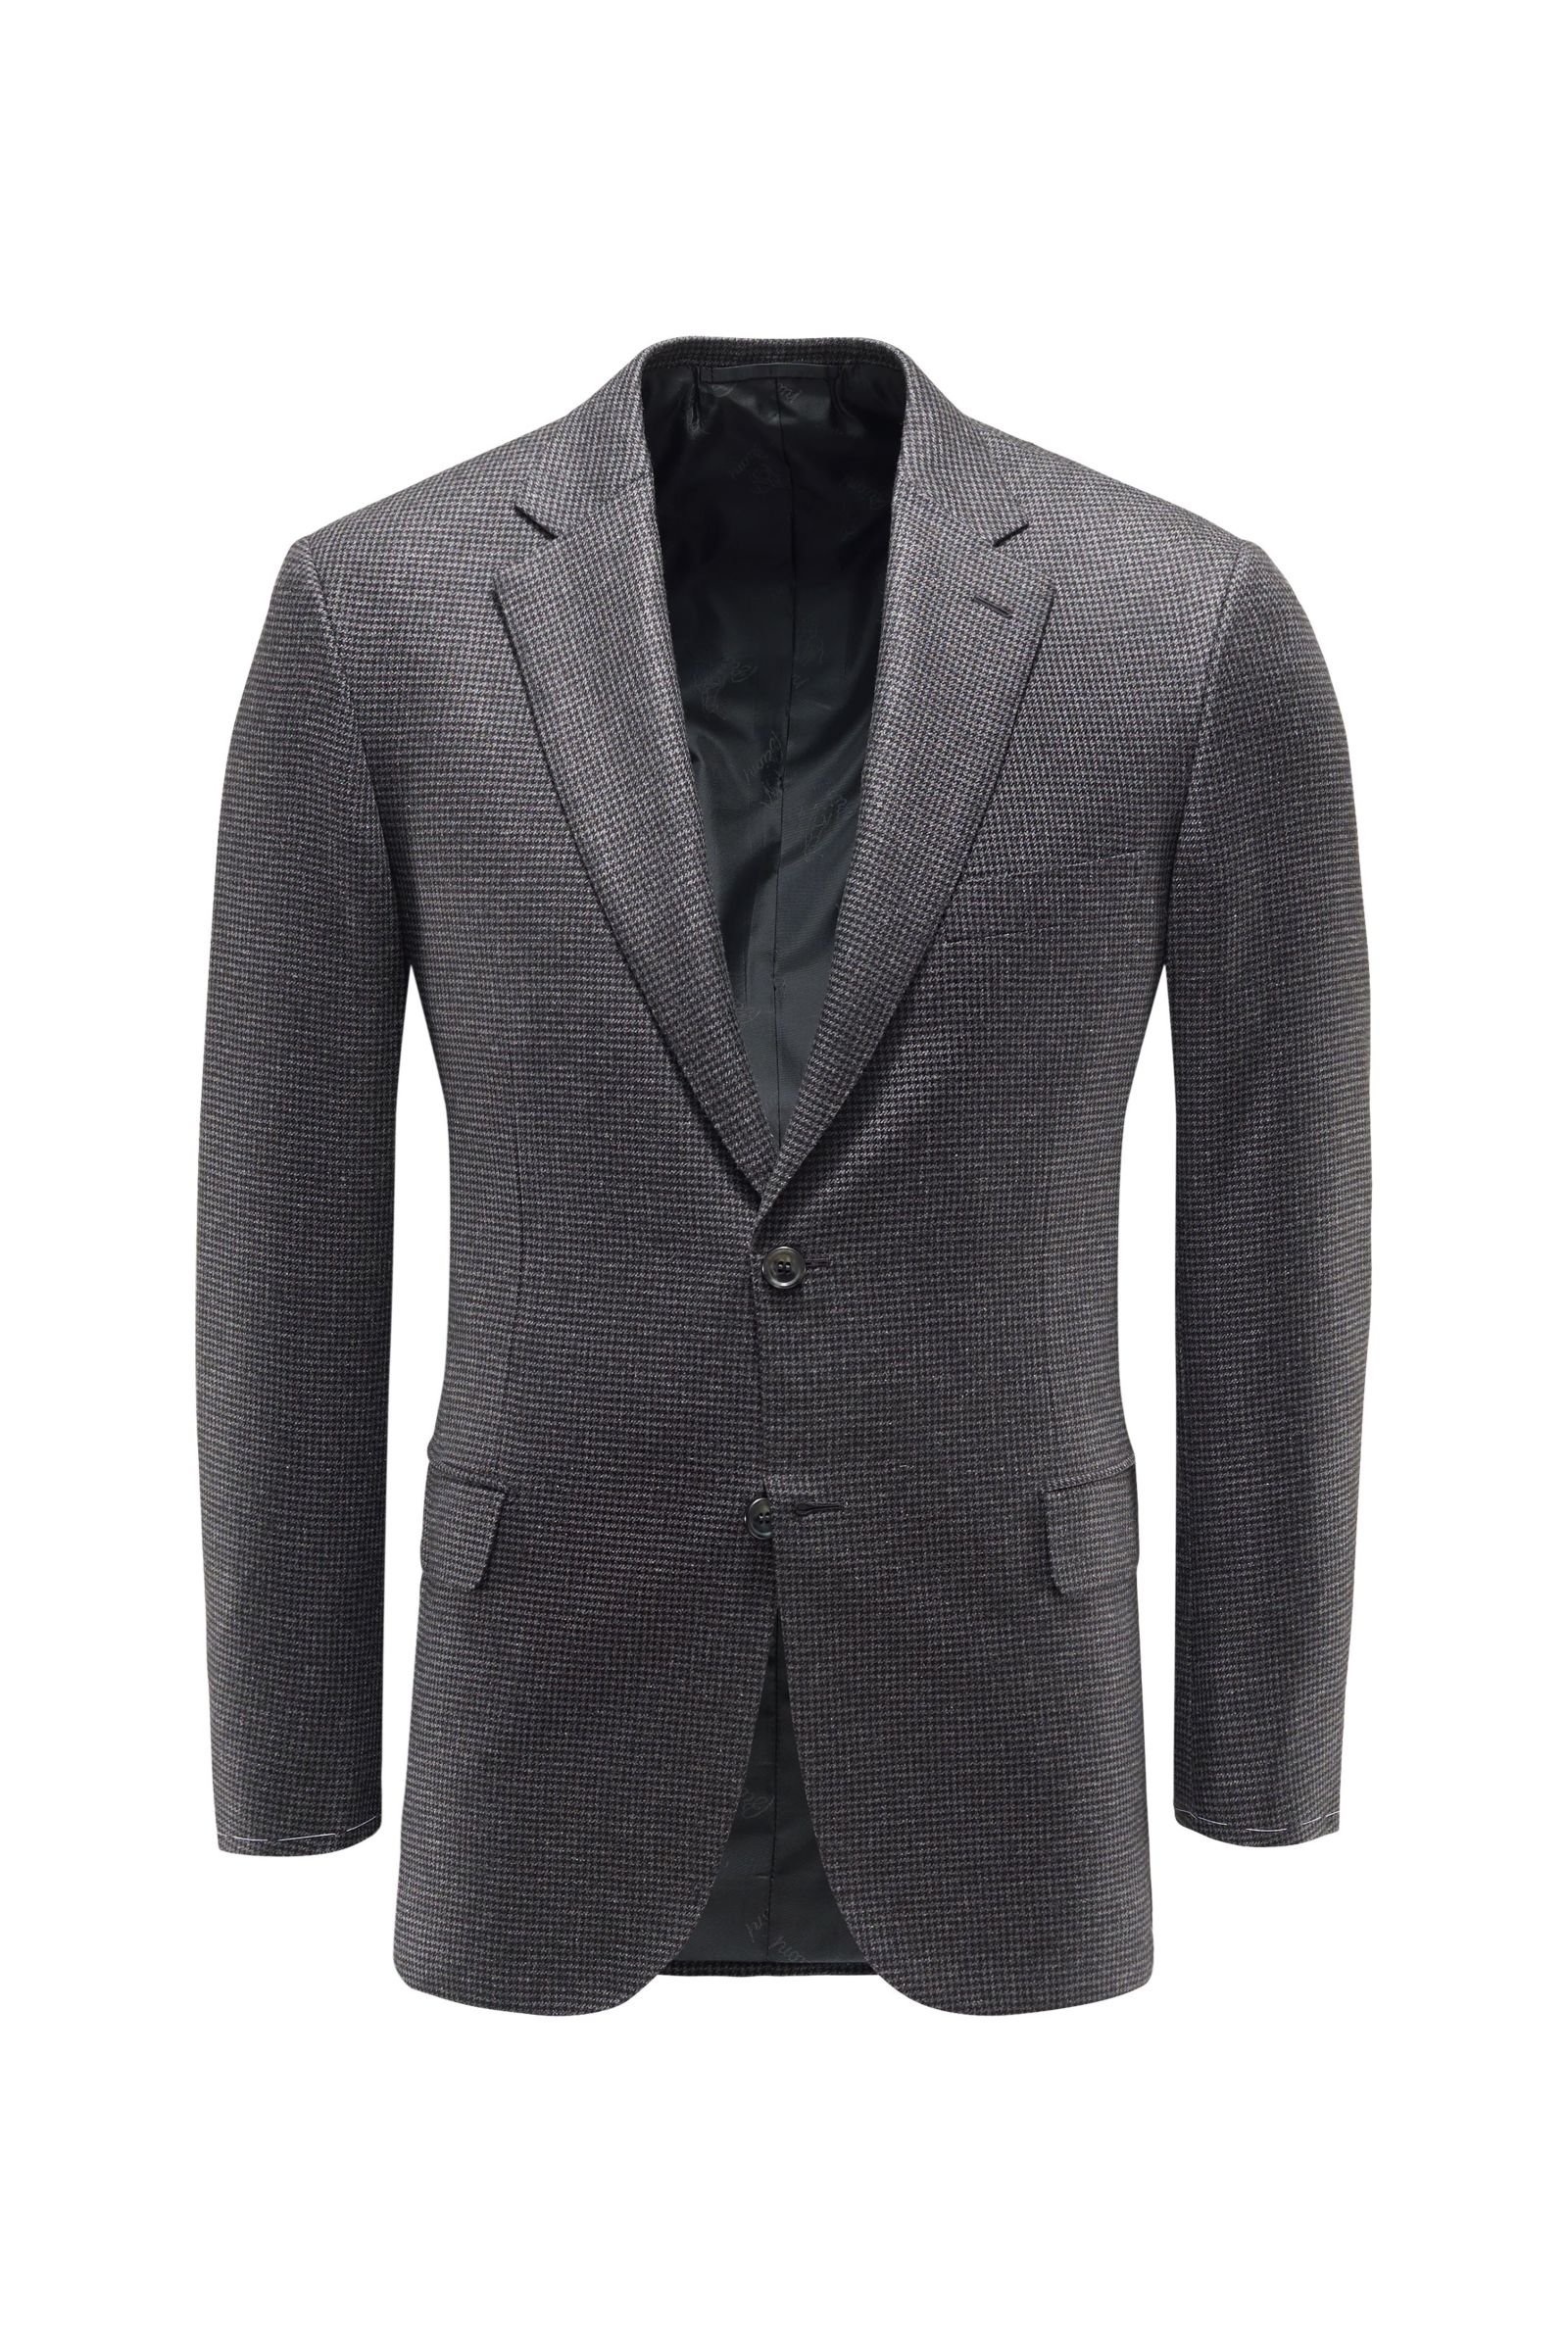 Smart-casual jacket 'Brunico' grey checked